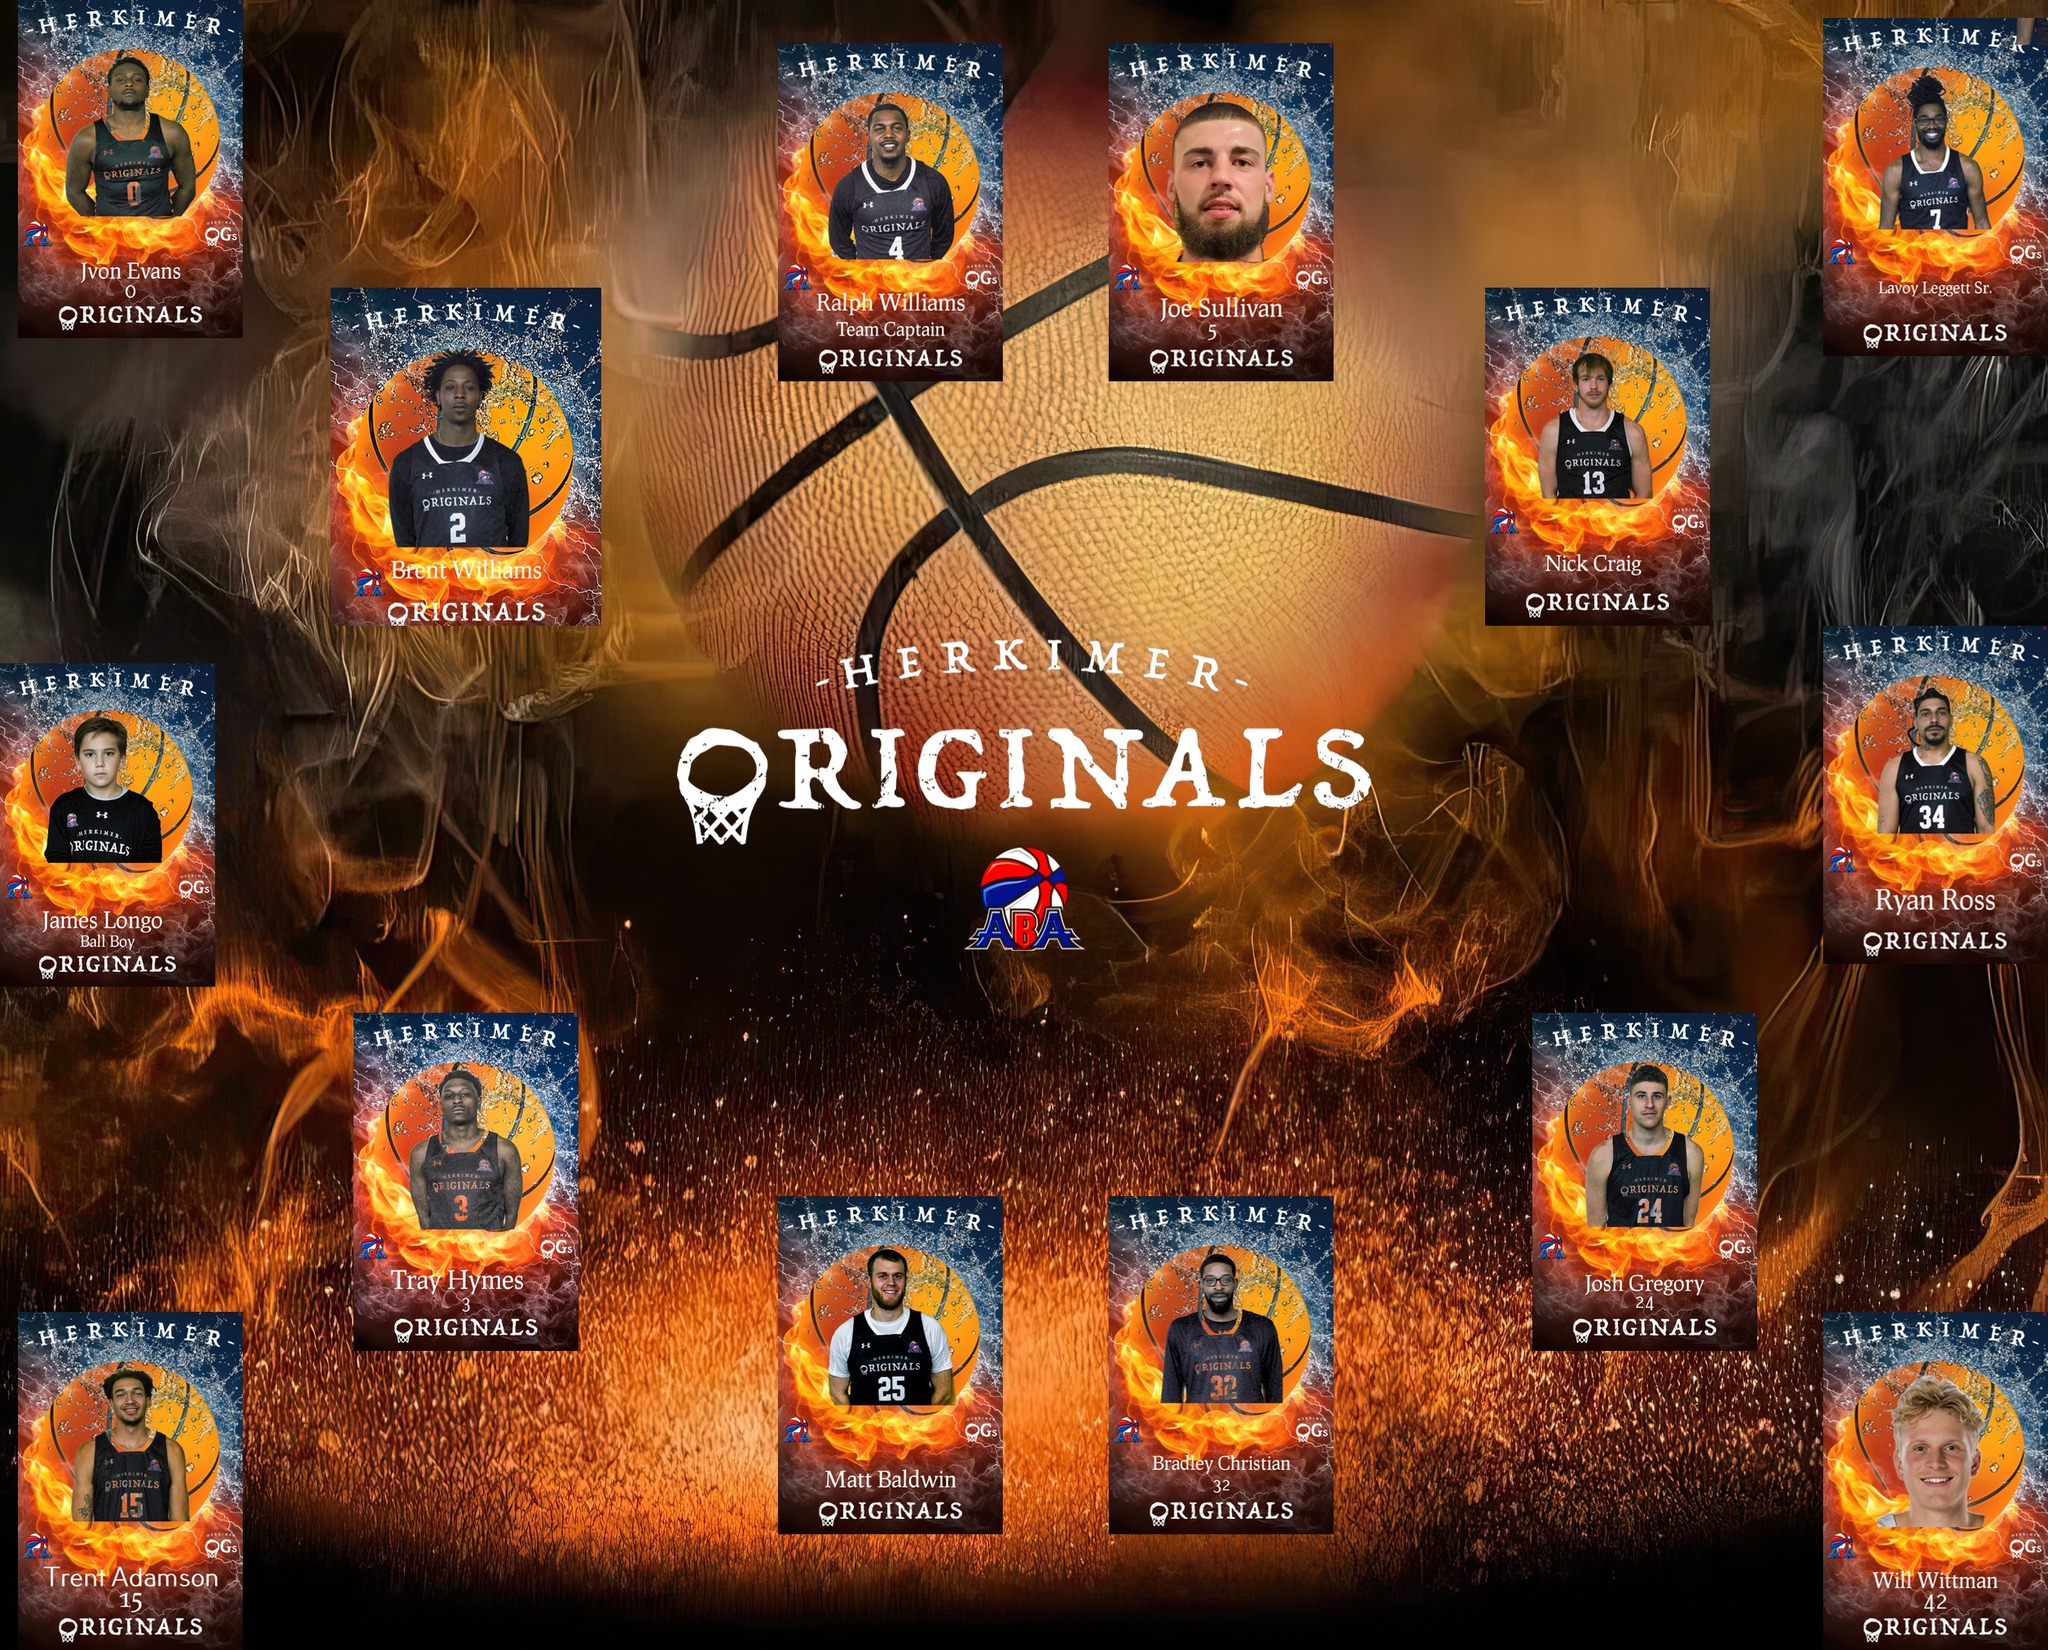 The Herkimer Originals | Herkimer OGs | Professional ABA Basketball Team